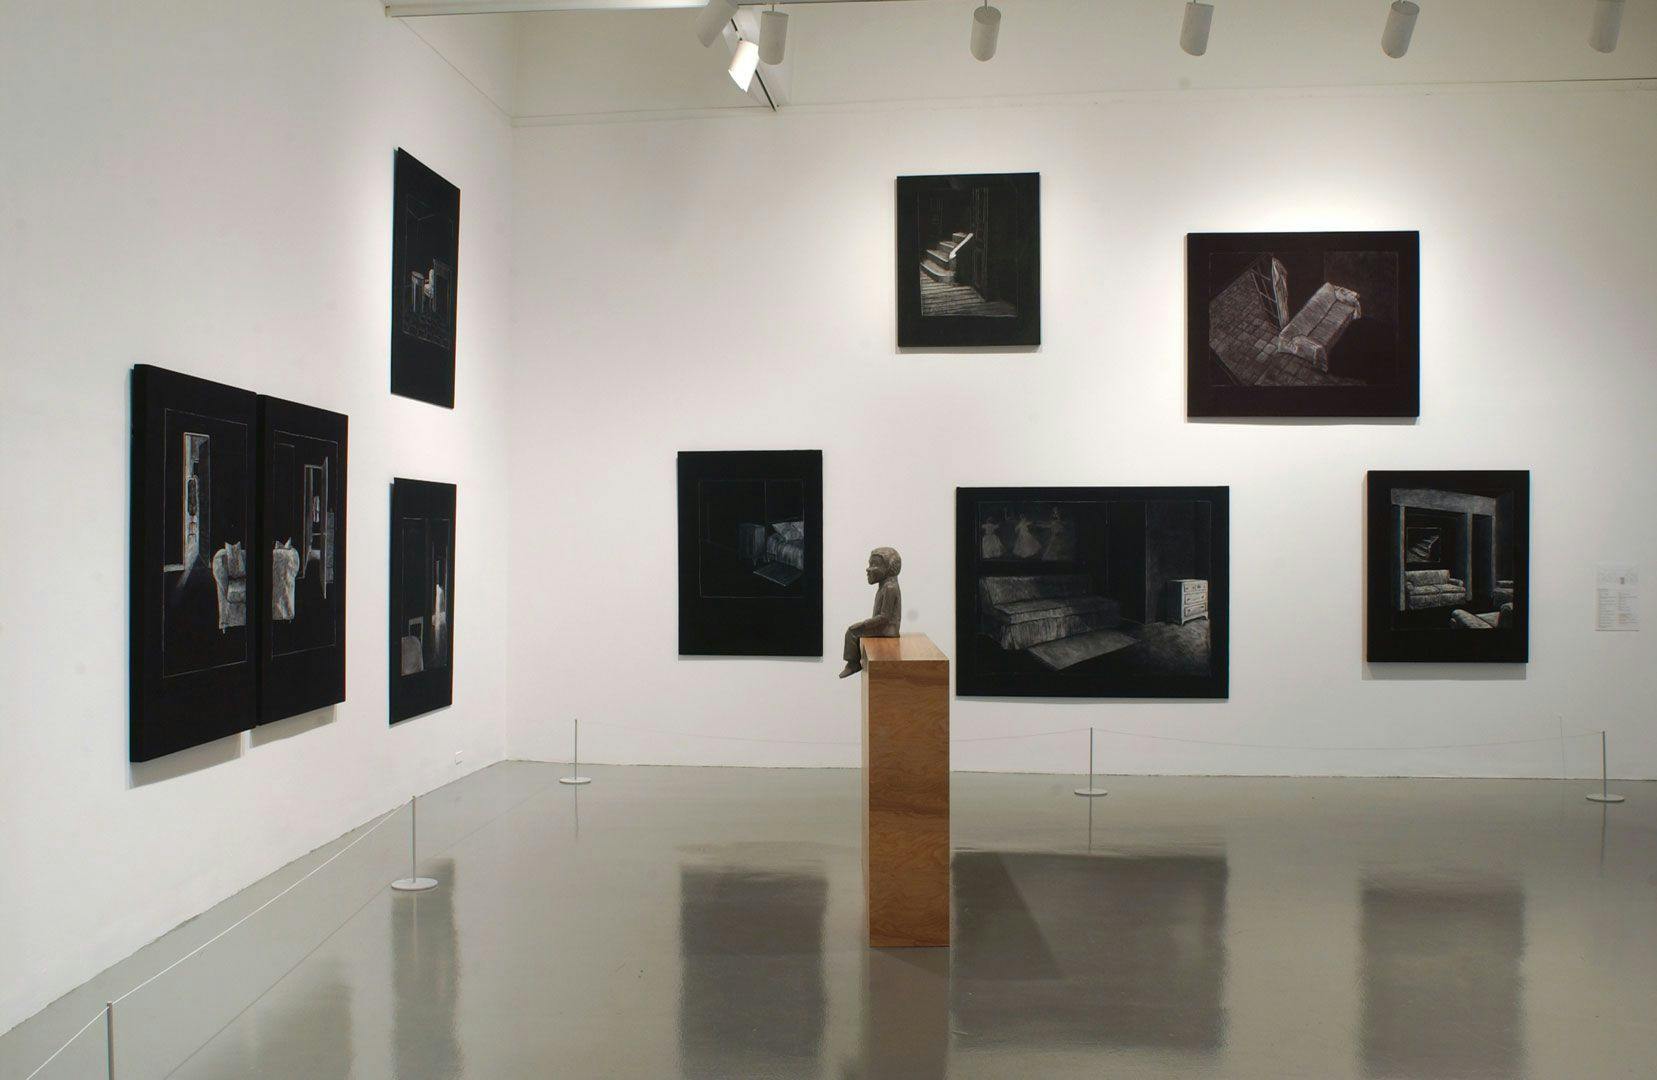 An installation view of the exhibition Juan Muñoz, at Hirshhorn Museum and Sculpture Garden, Smithsonian Institution, Washington, D.C., dated 2001. 